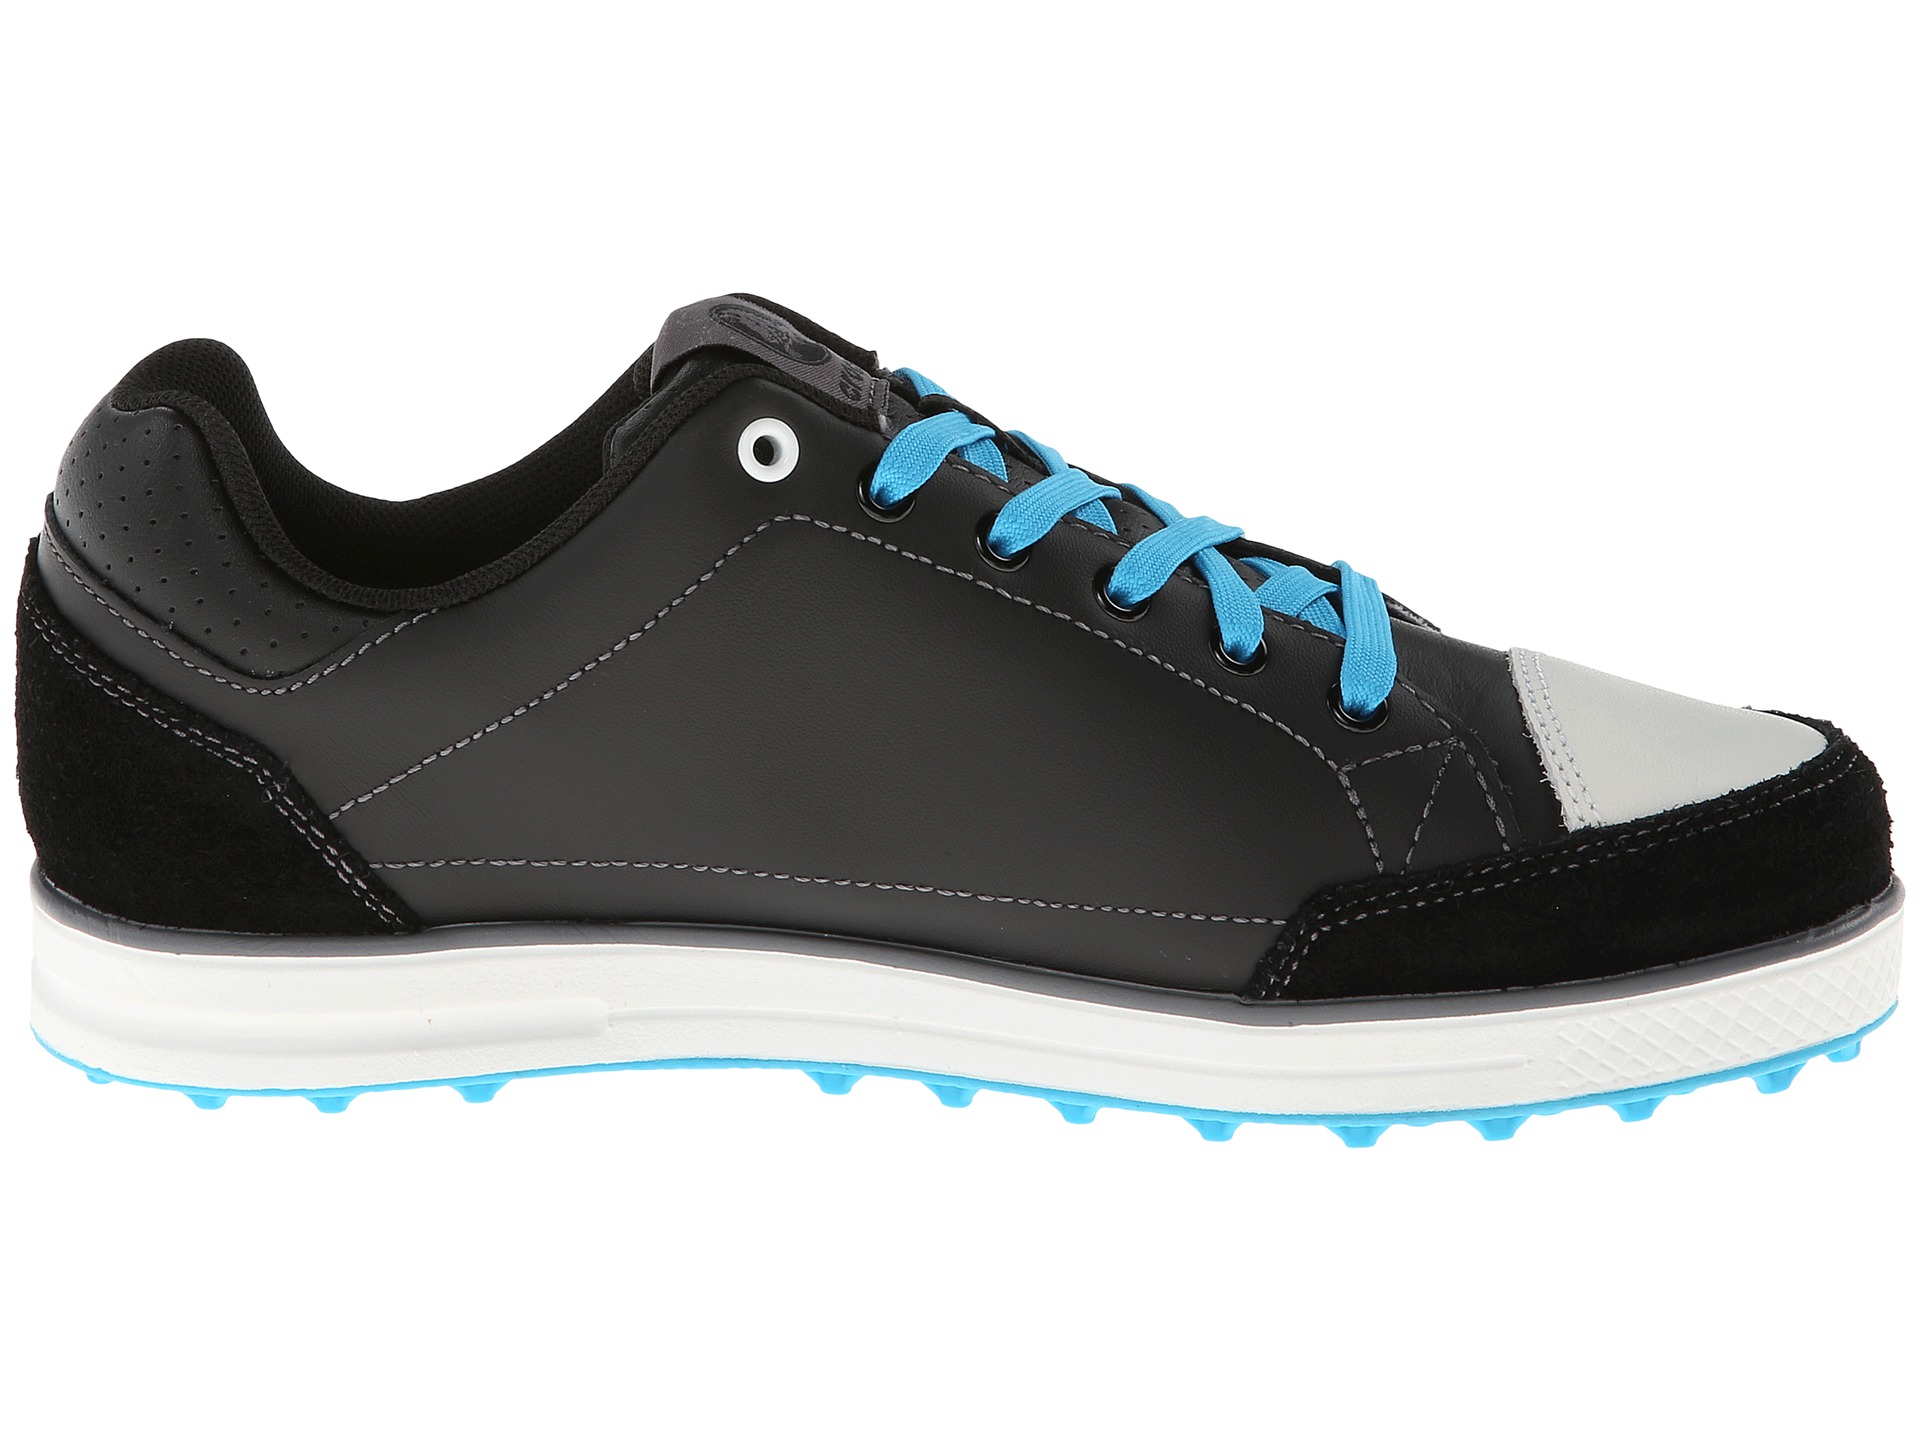 Crocs Karlson Golf Shoe M Black Electric Blue | Shipped Free at Zappos